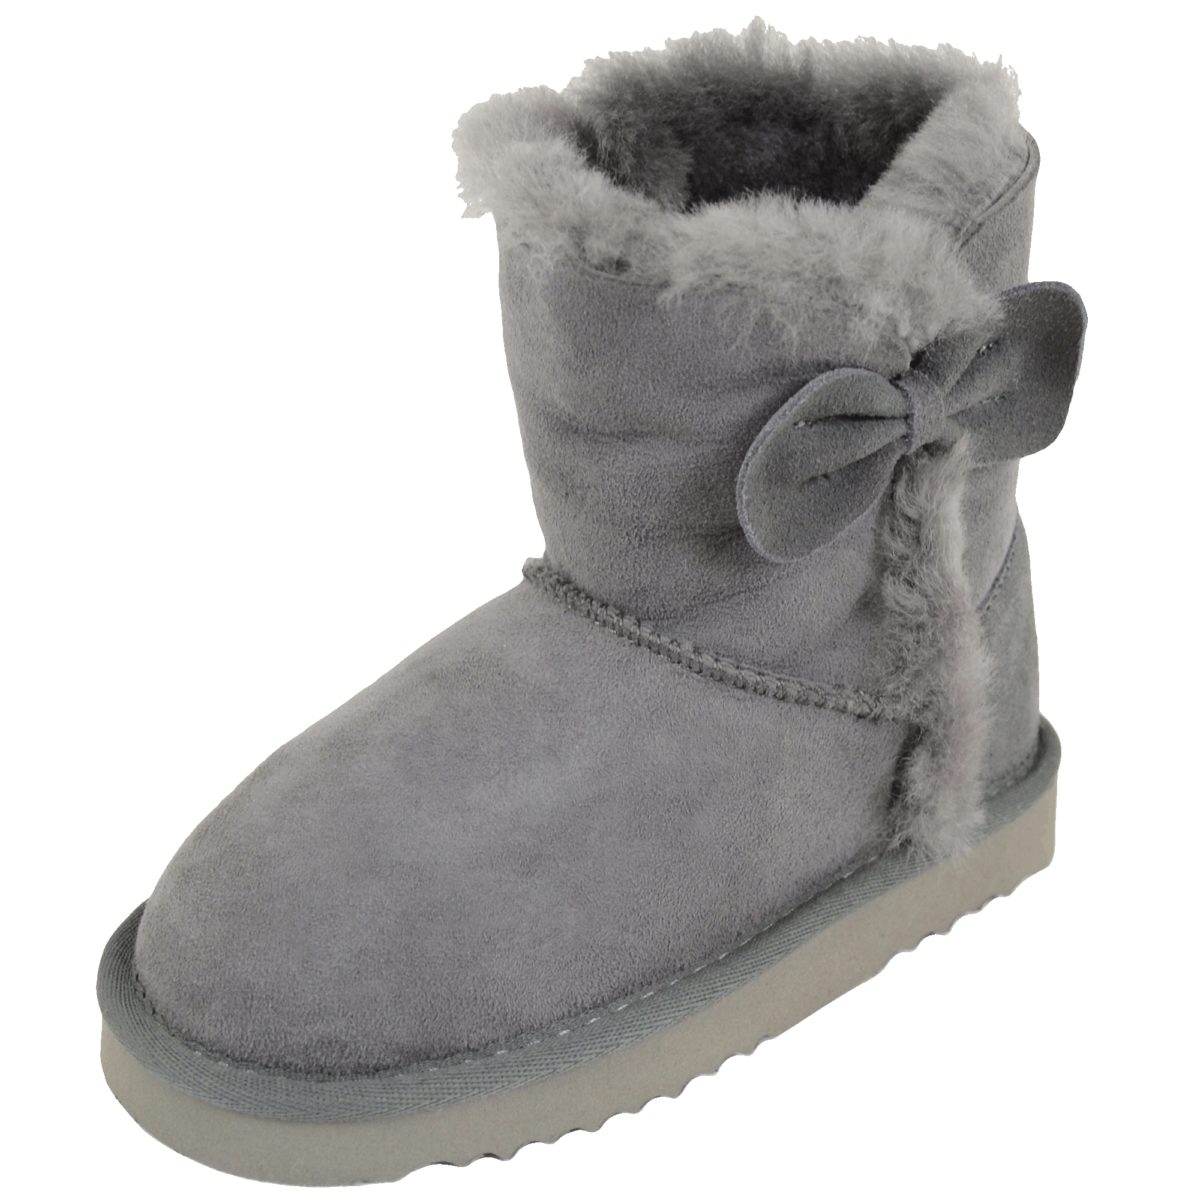 Snugrugs Childs Sheepskin Boots Grey